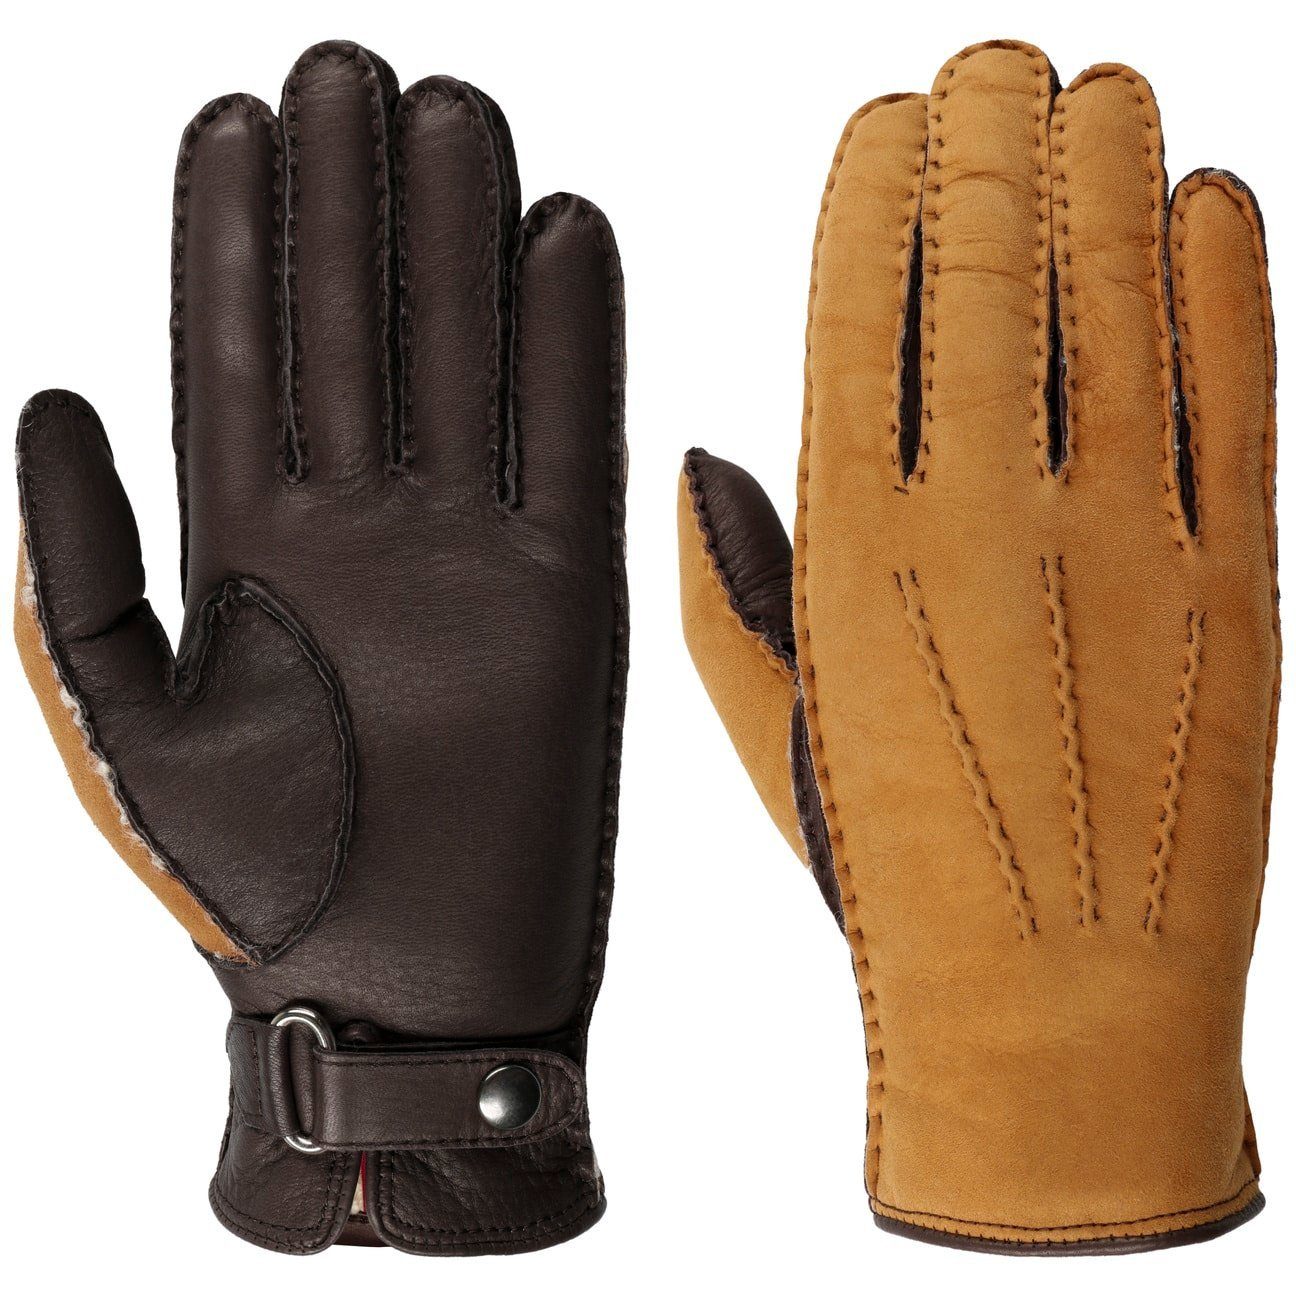 Caridei Lederhandschuhe Handschuhe mit Futter, Made in Italy braun